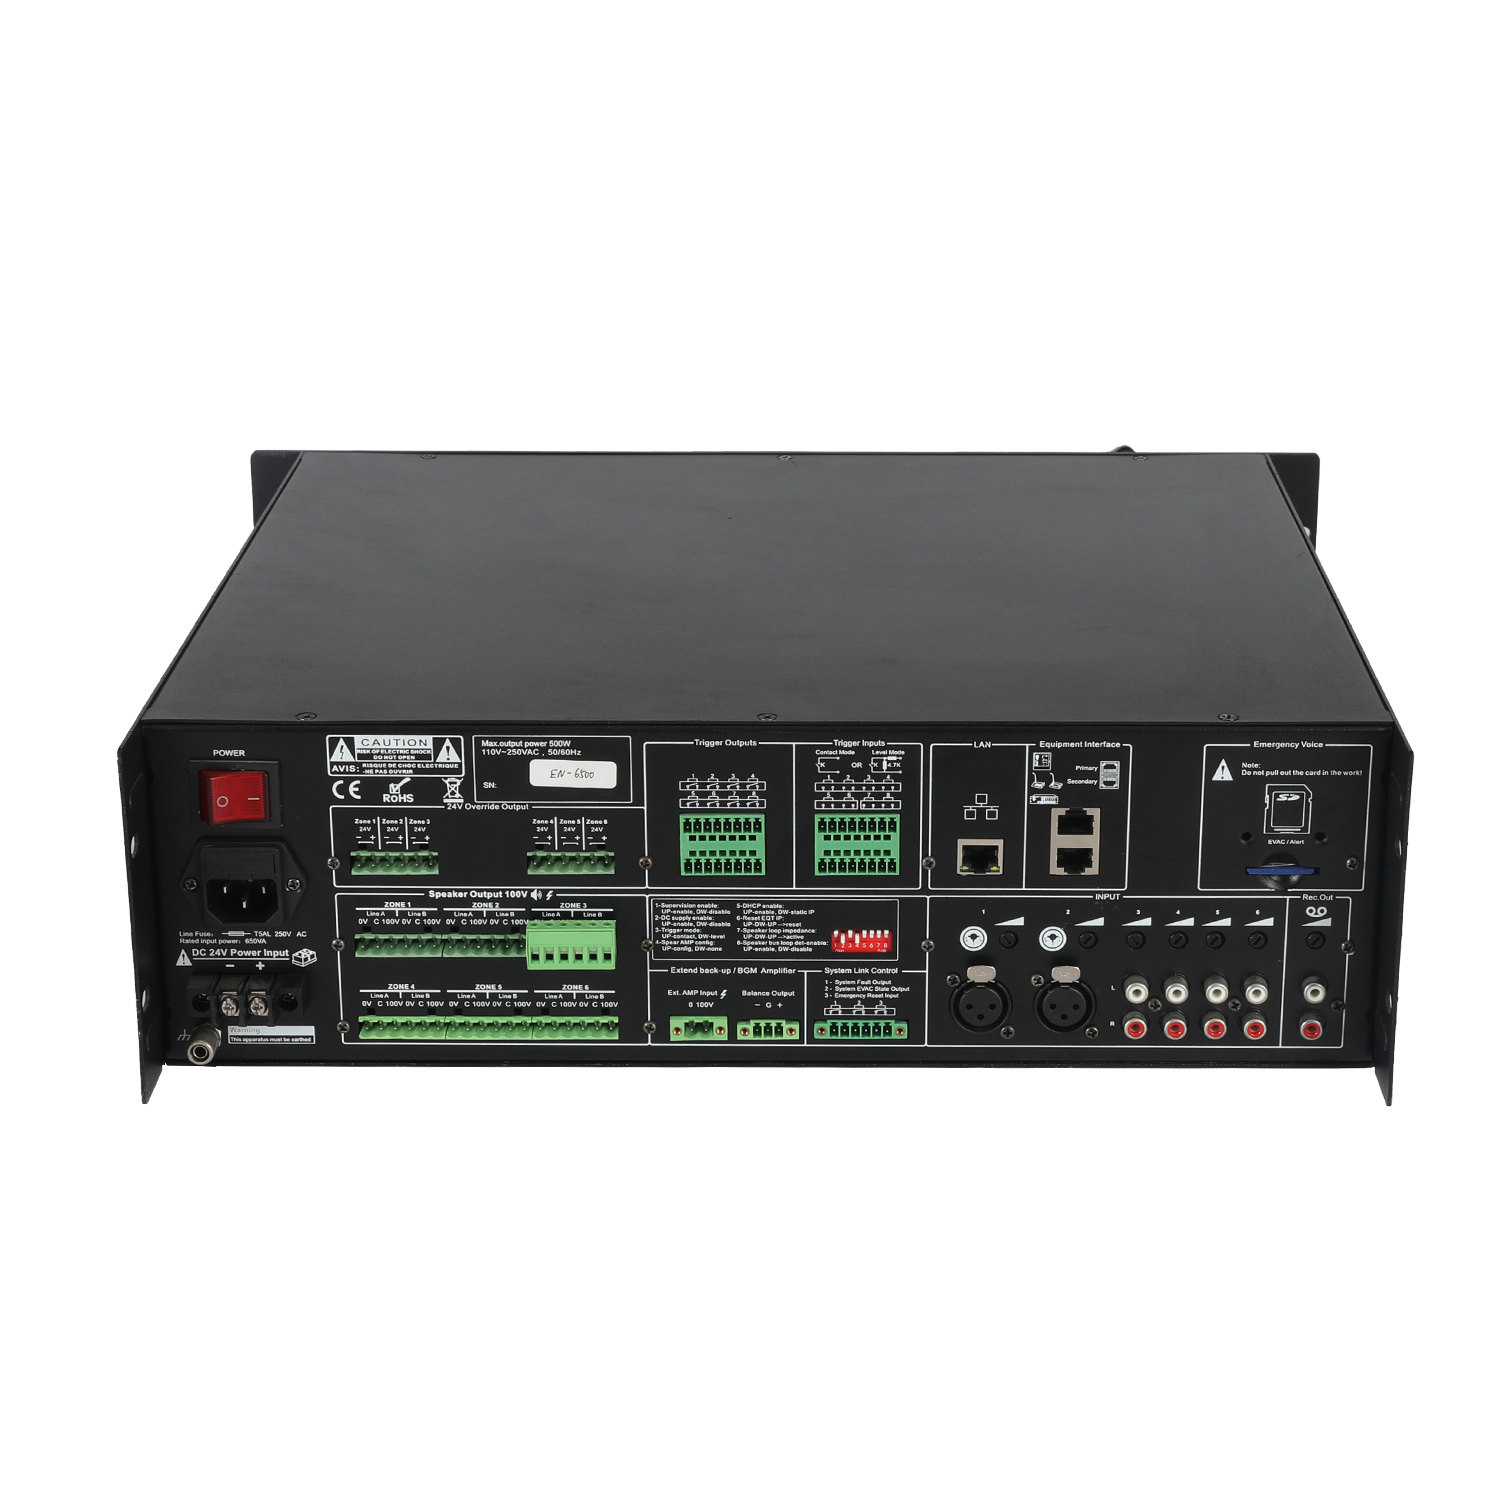 EN-6500 Voice Alarm system controler